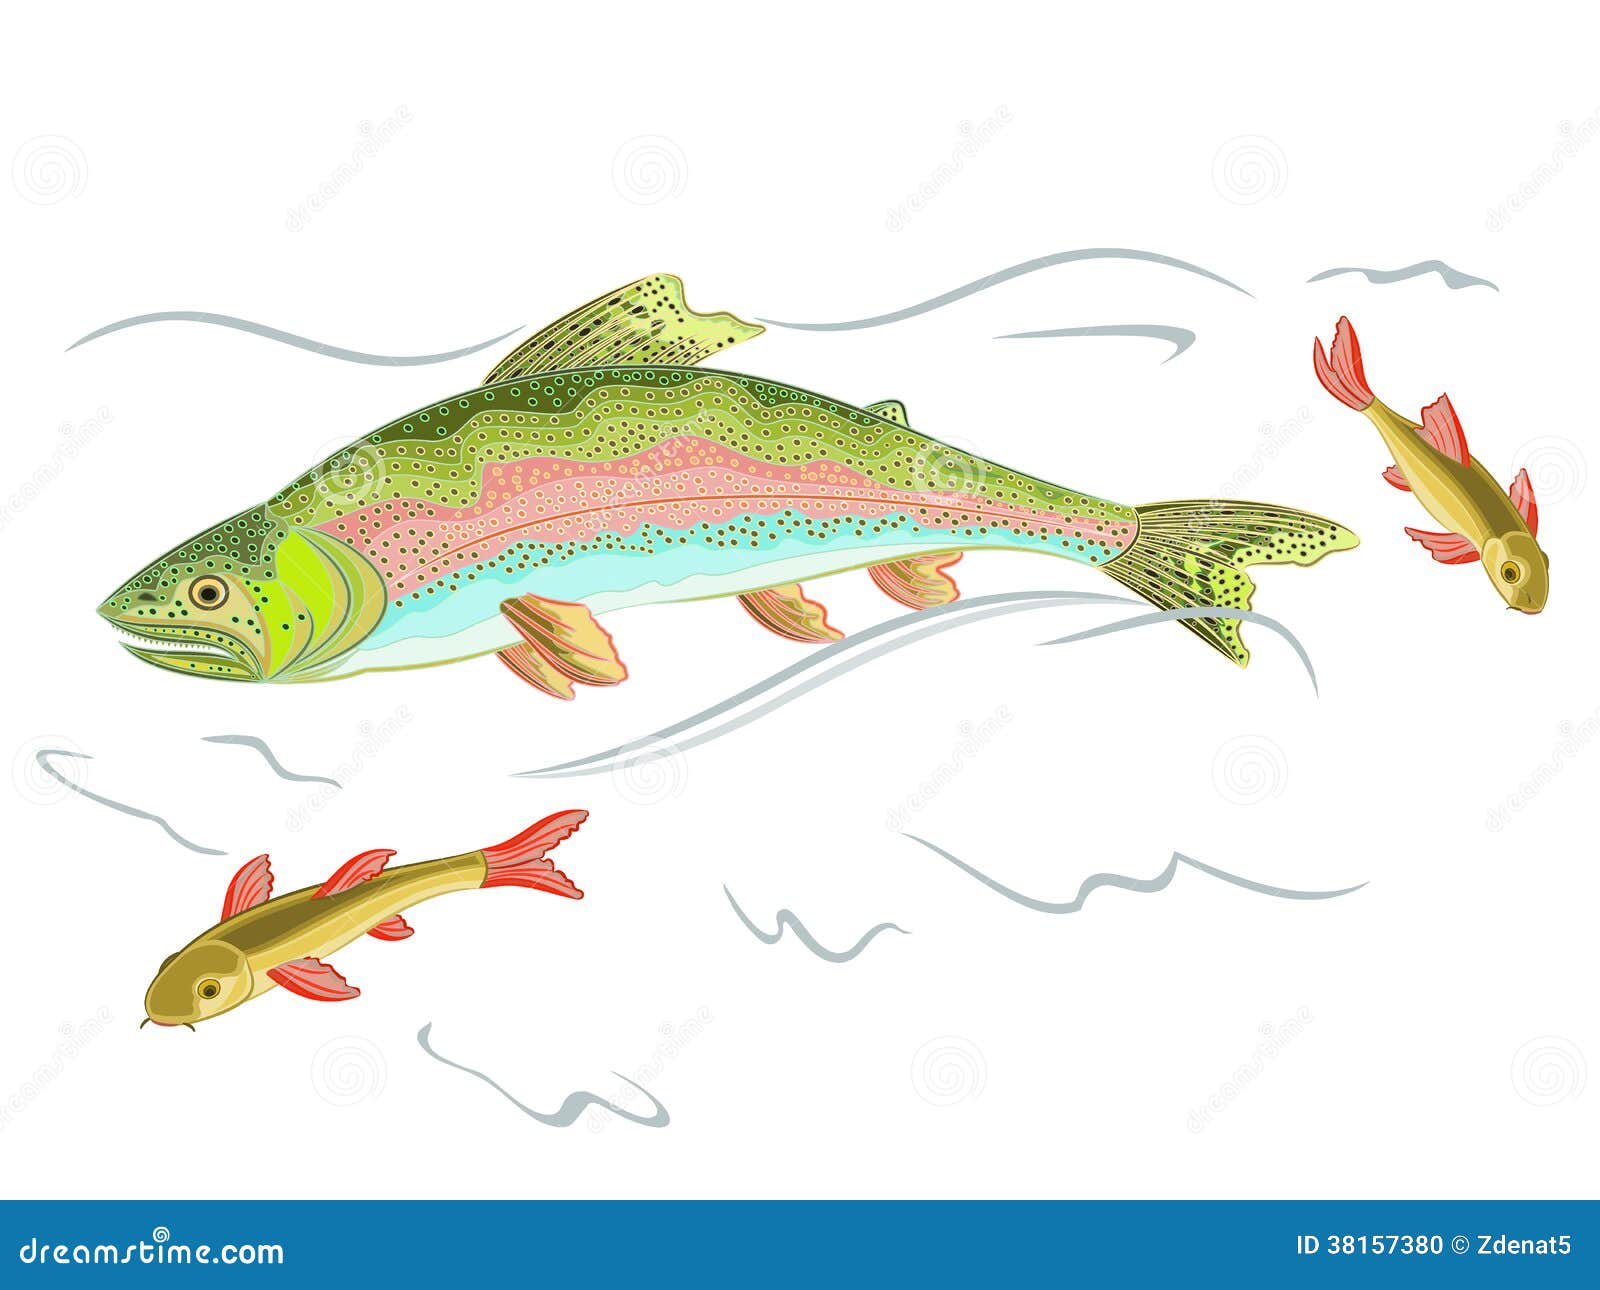 clipart rainbow trout - photo #29